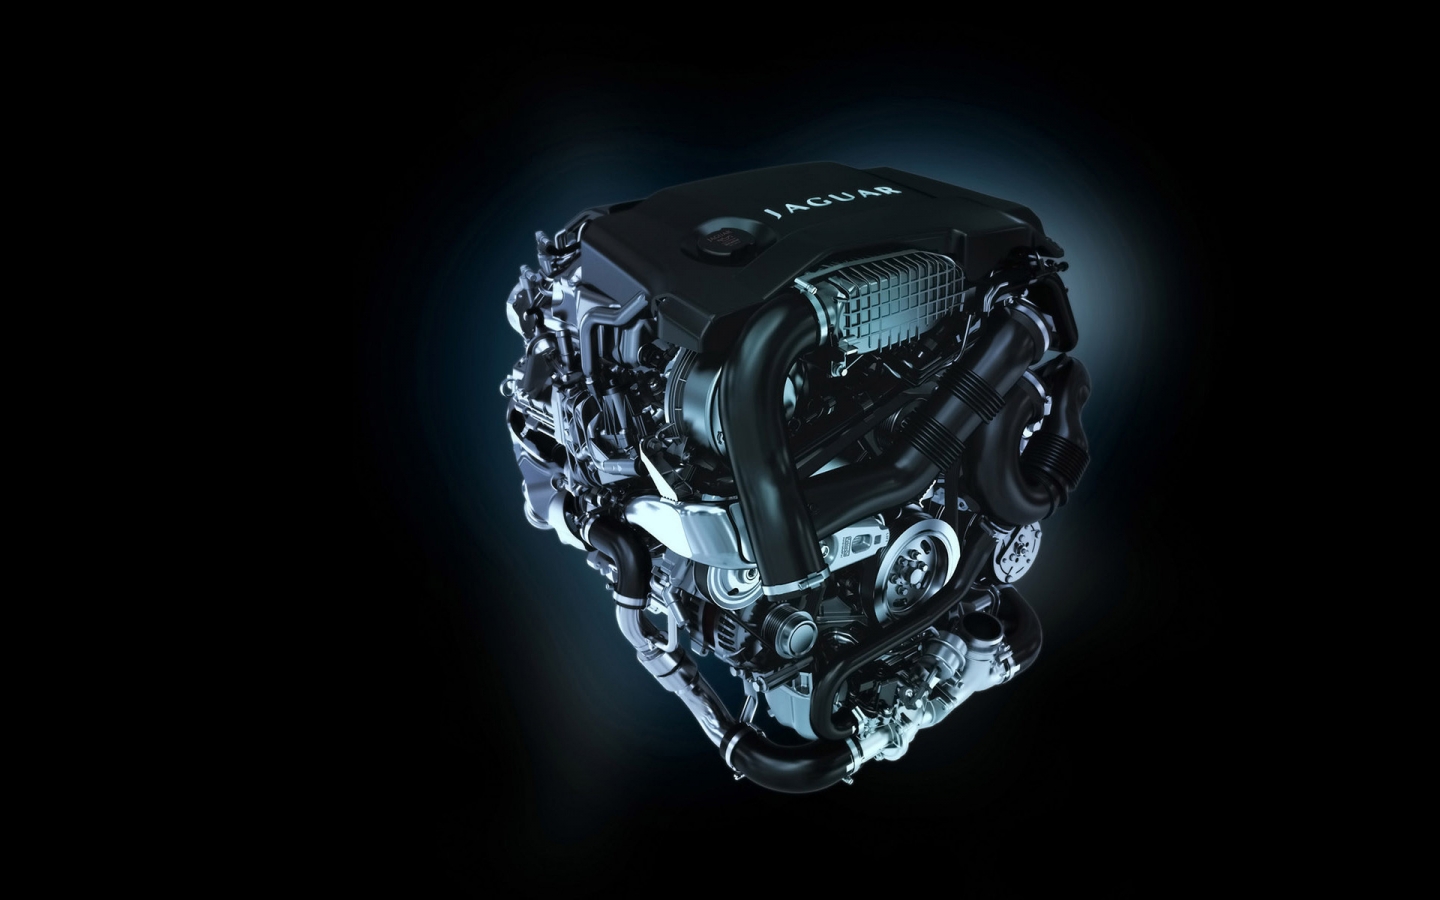 Jaguar XF Diesel S Engine for 1440 x 900 widescreen resolution